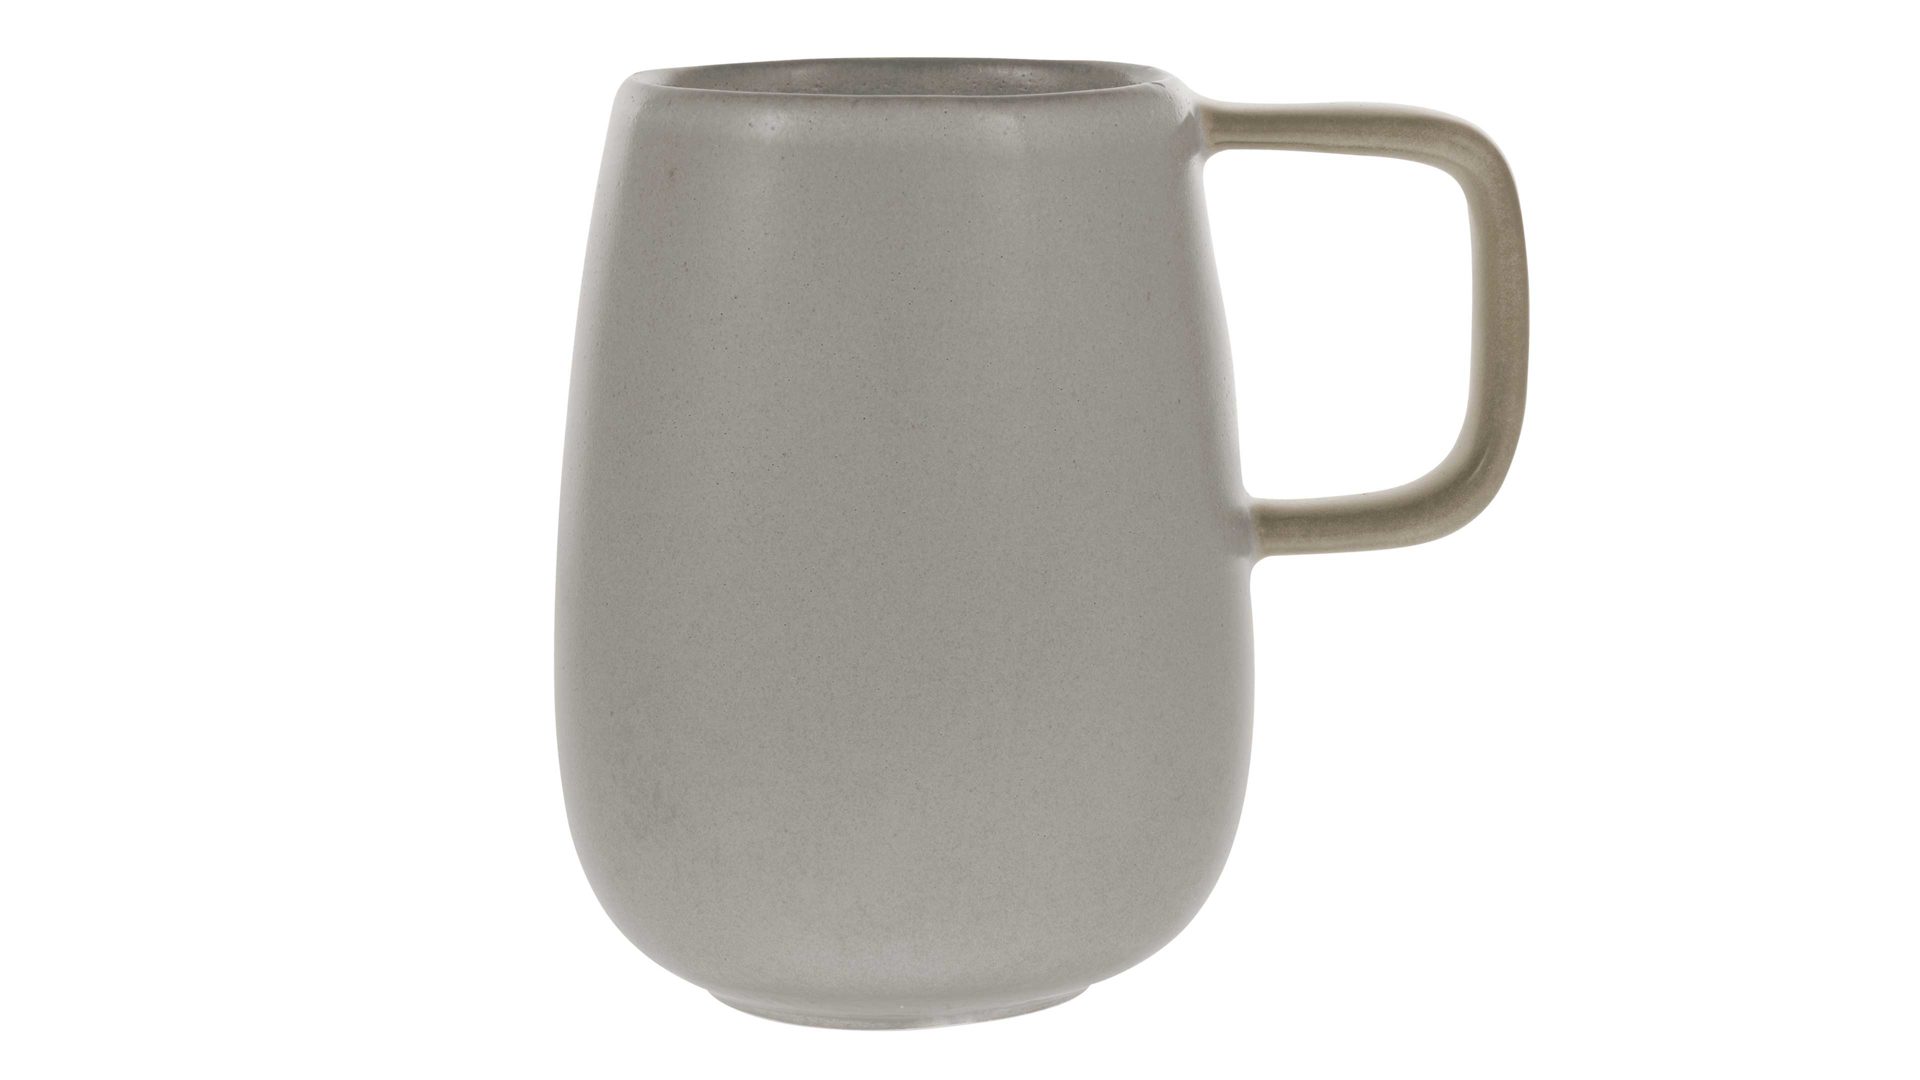 Kaffeebecher Creatable aus Keramik in Grau CREATABLE Uno – Kaffeebecher graues Steinzeug - 370 ml Fassungsvermögen